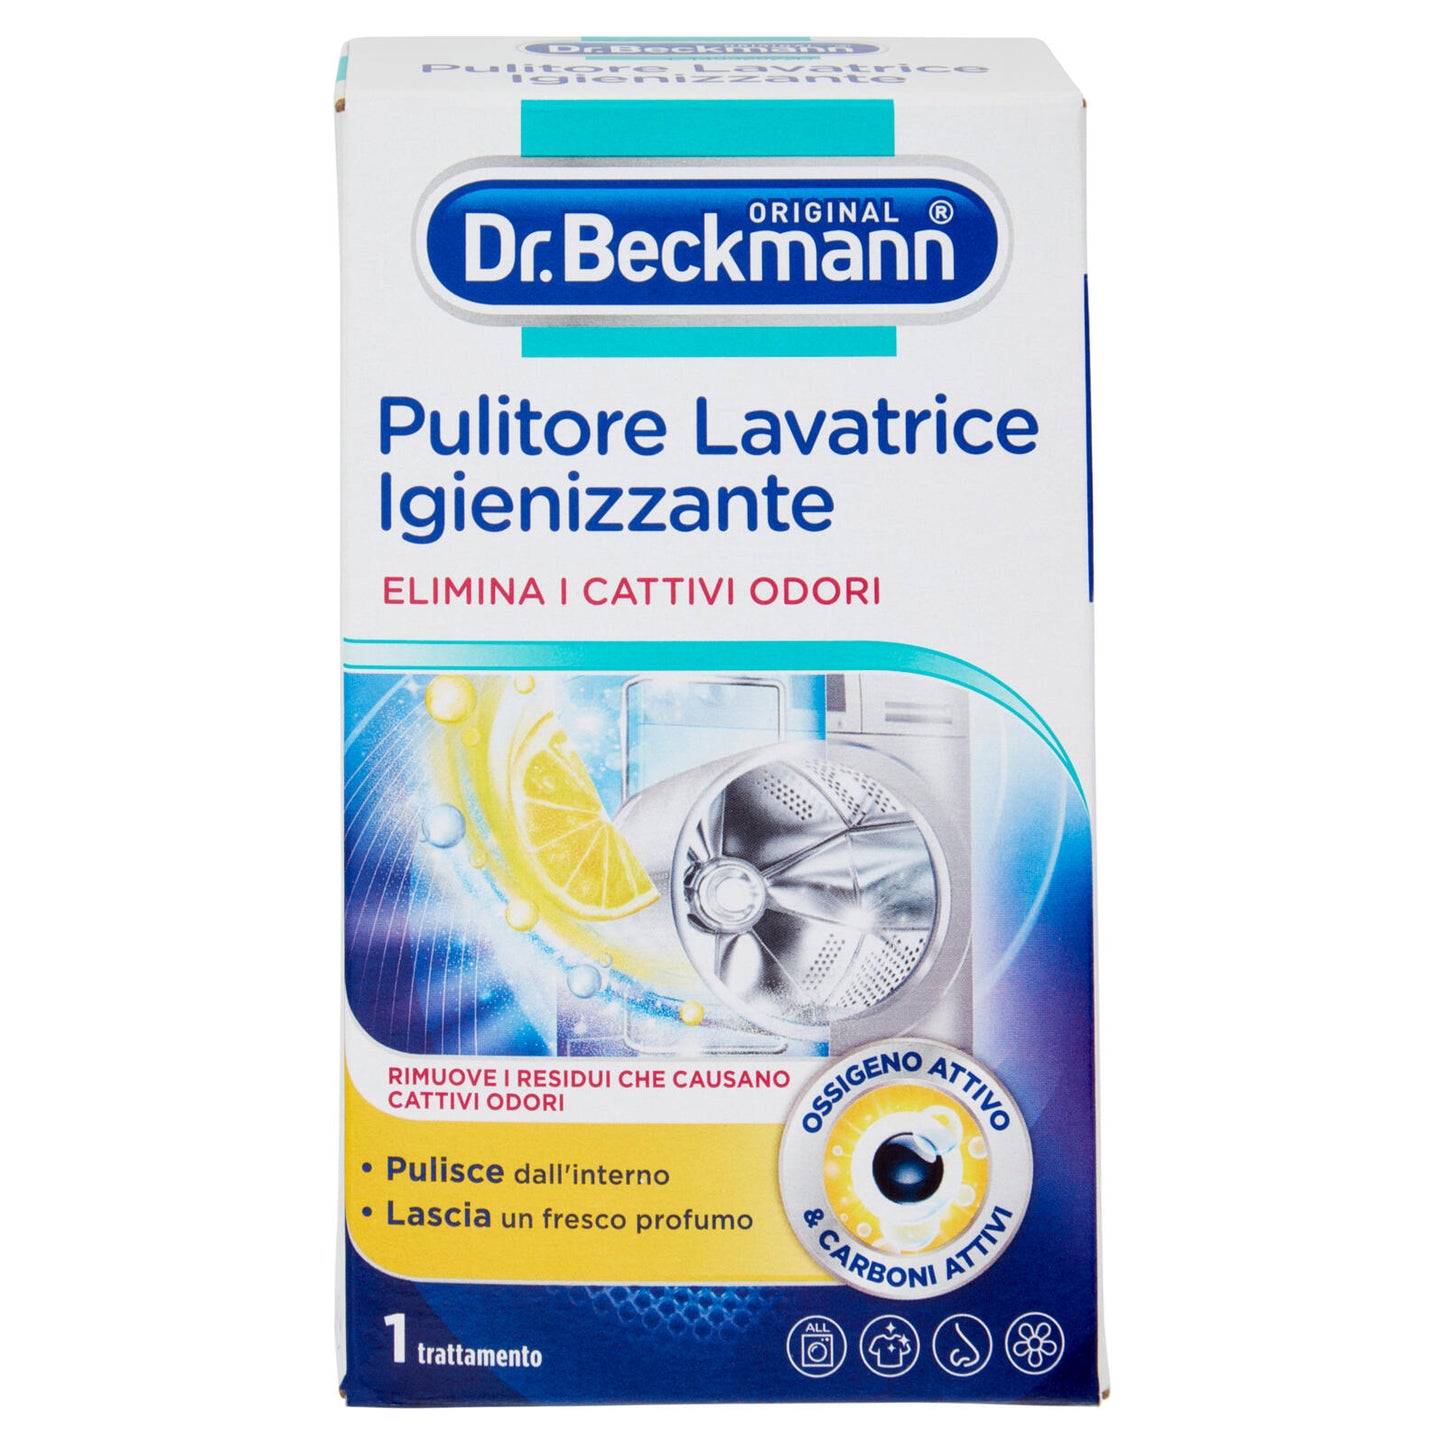 Dr. Beckmann Pulitore Lavatrice Igienizzante 250 g